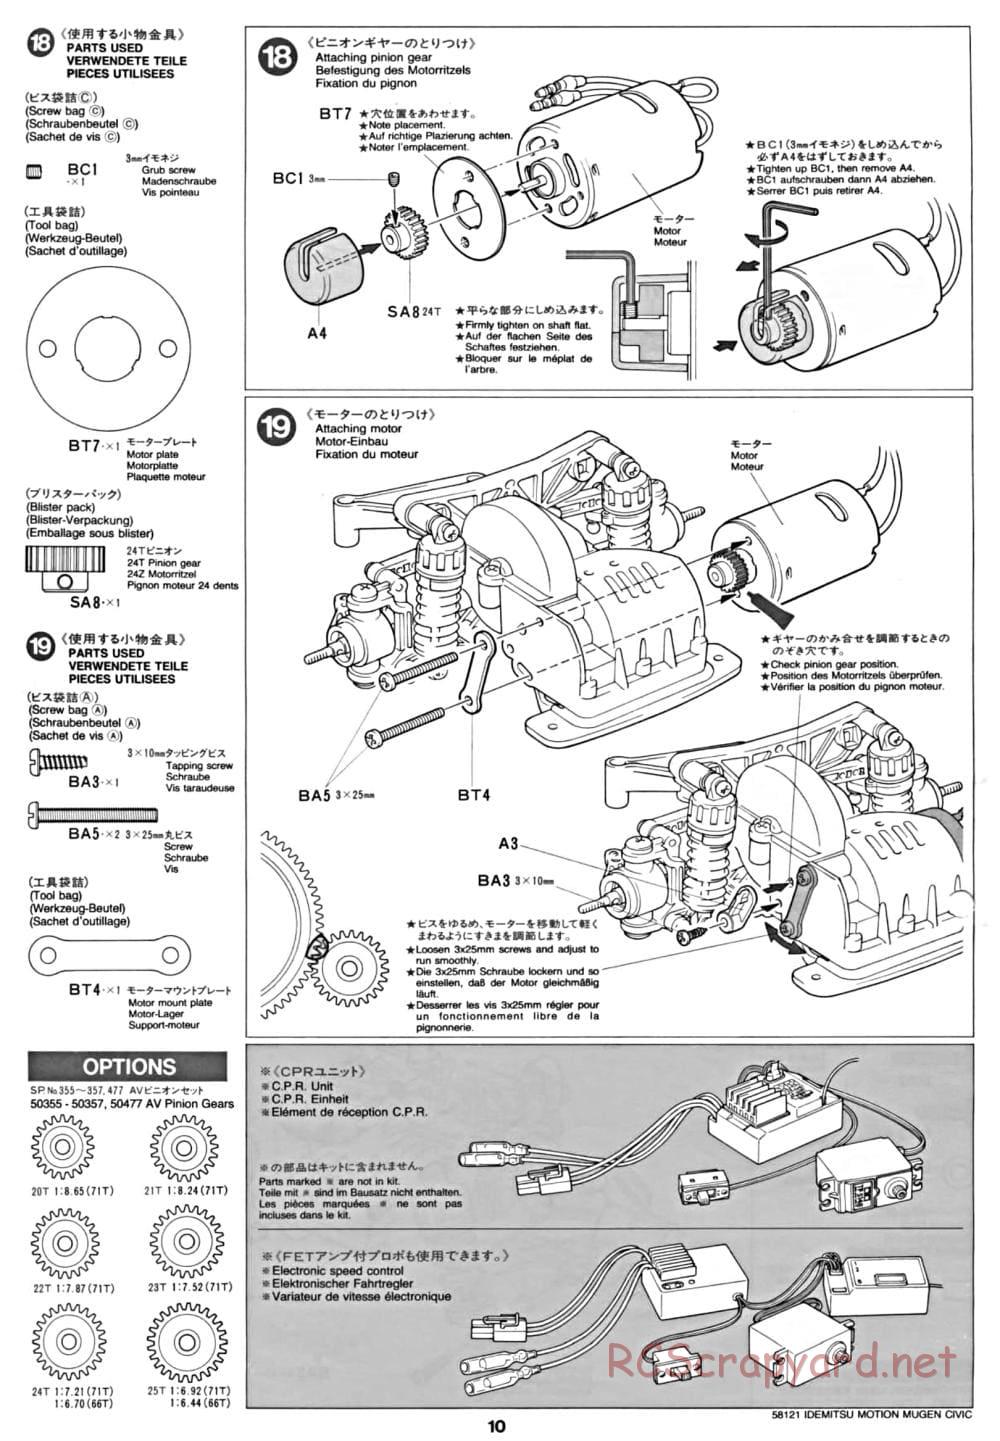 Tamiya - Idemitsu Motion Mugen Civic - FF-01 Chassis - Manual - Page 10